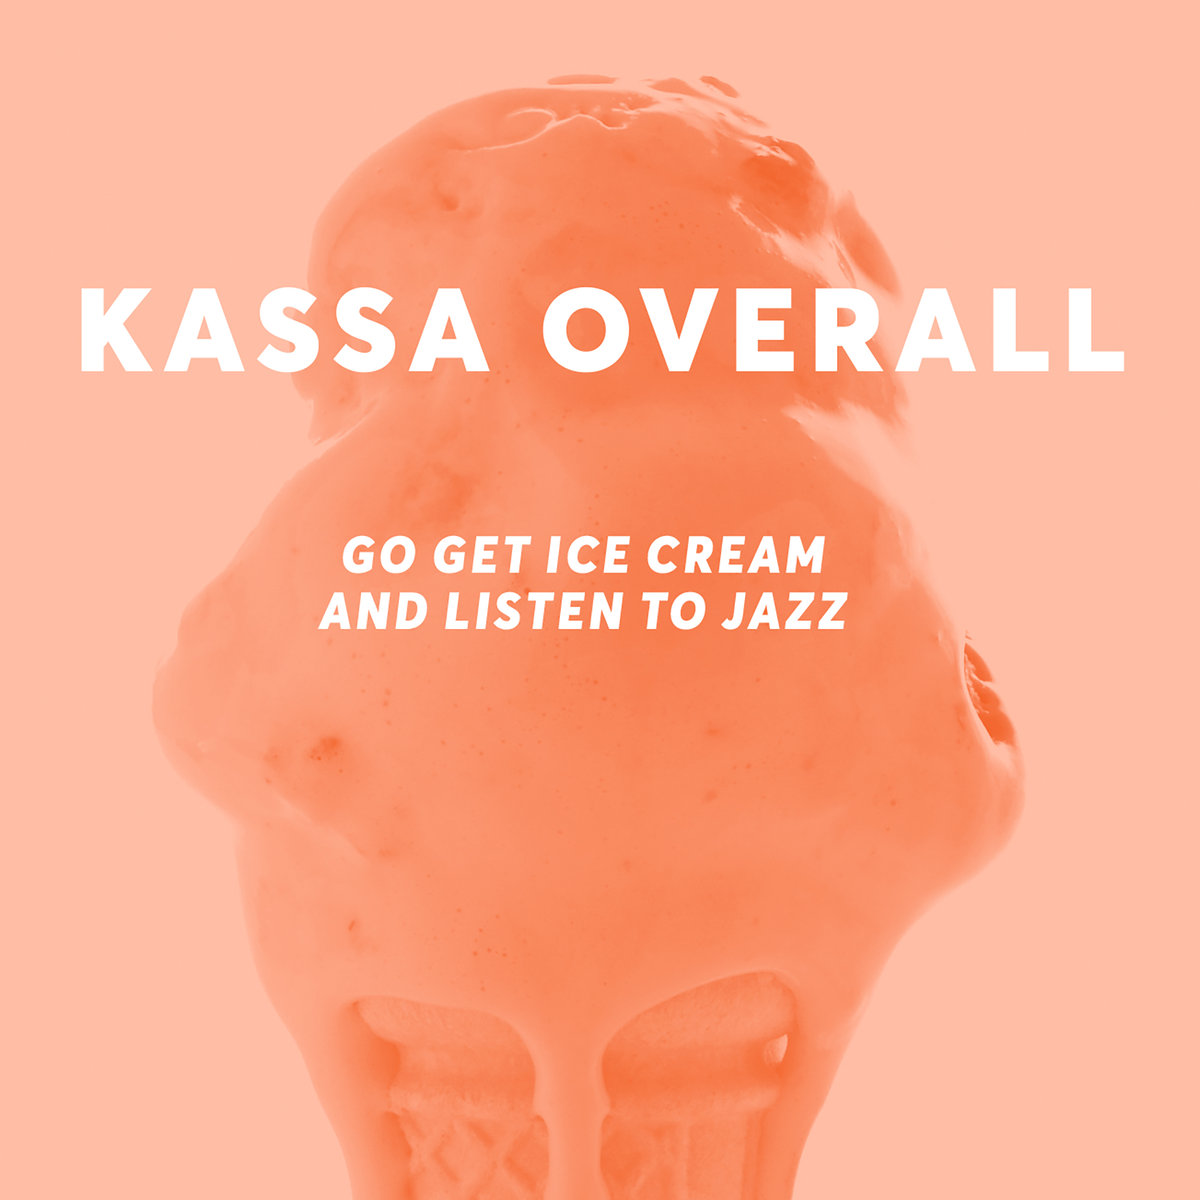 Kassa Overall – Go Get Ice Cream And Listen to Jazz